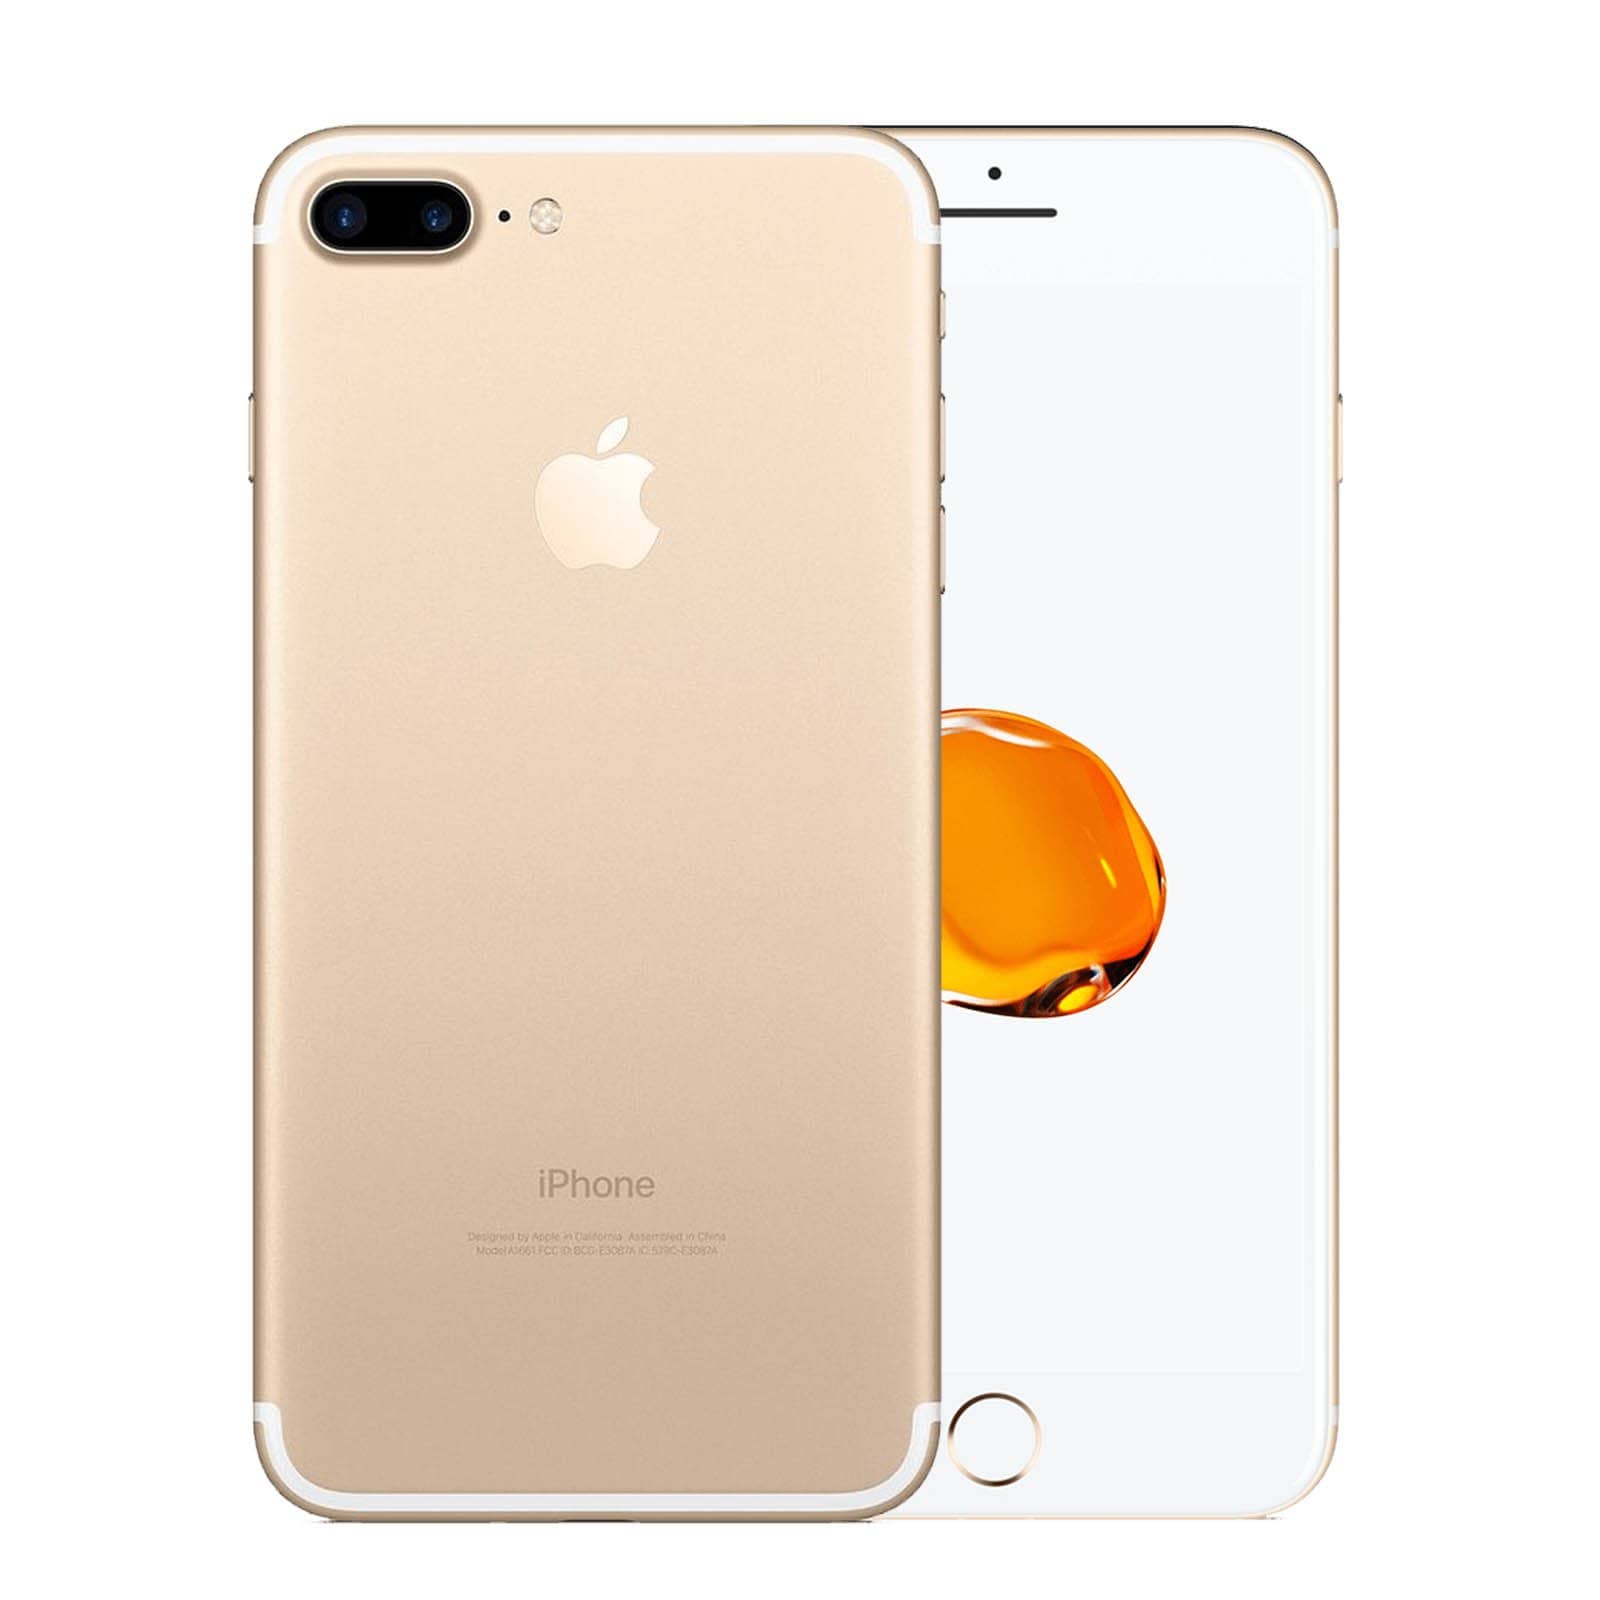 Apple iPhone 7 Plus 32GB Gold Very Good - Unlocked 32GB Gold Very Good